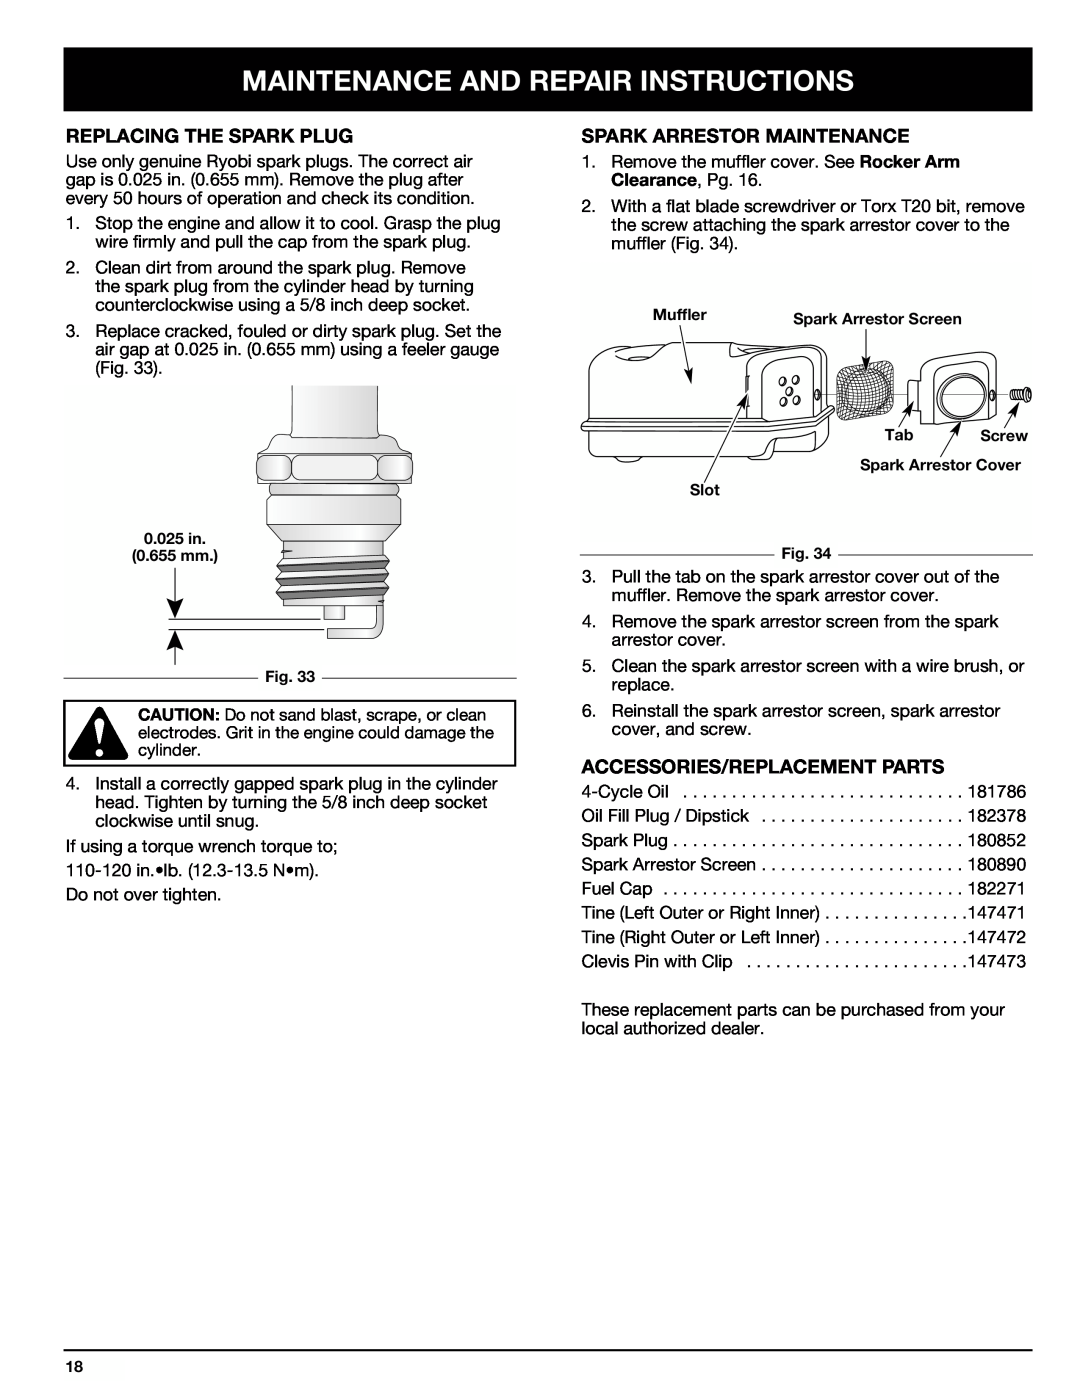 Ryobi Outdoor 510r manual Replacing The Spark Plug, Spark Arrestor Maintenance, Accessories/Replacement Parts 